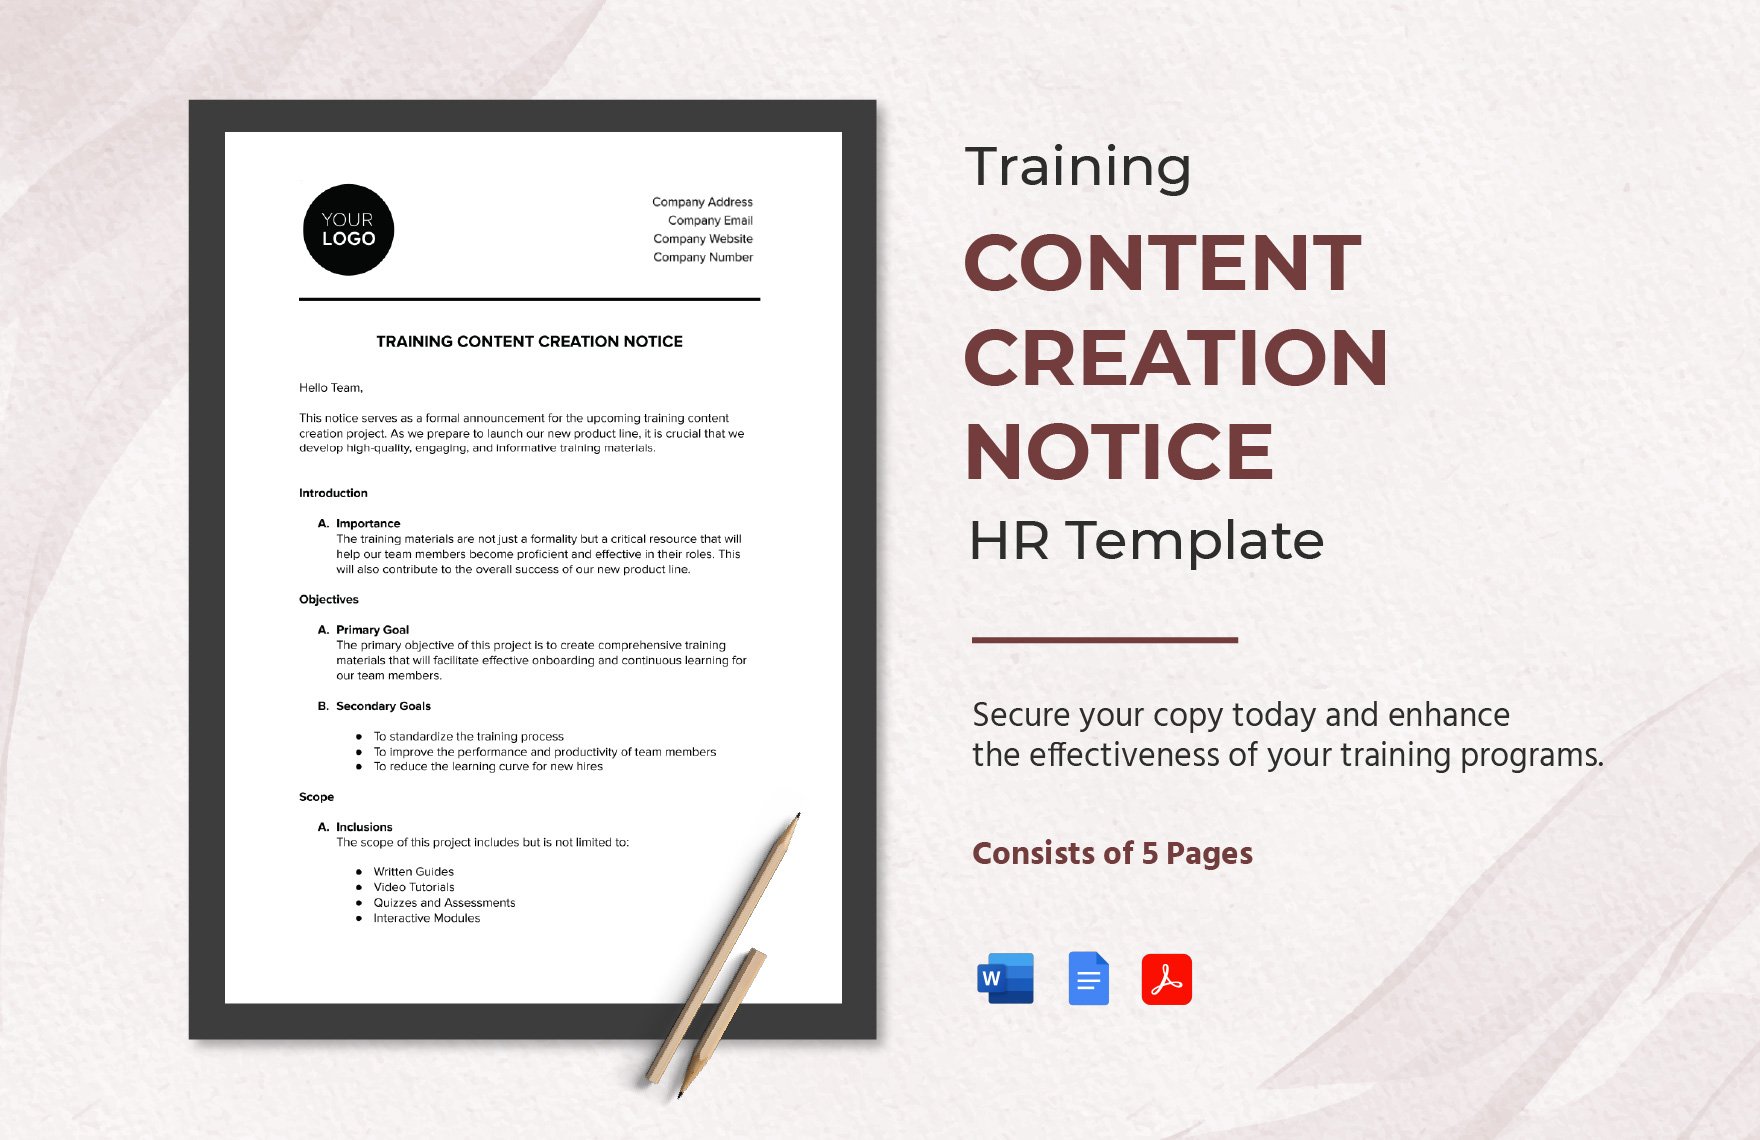 Training Content Creation Notice HR Template